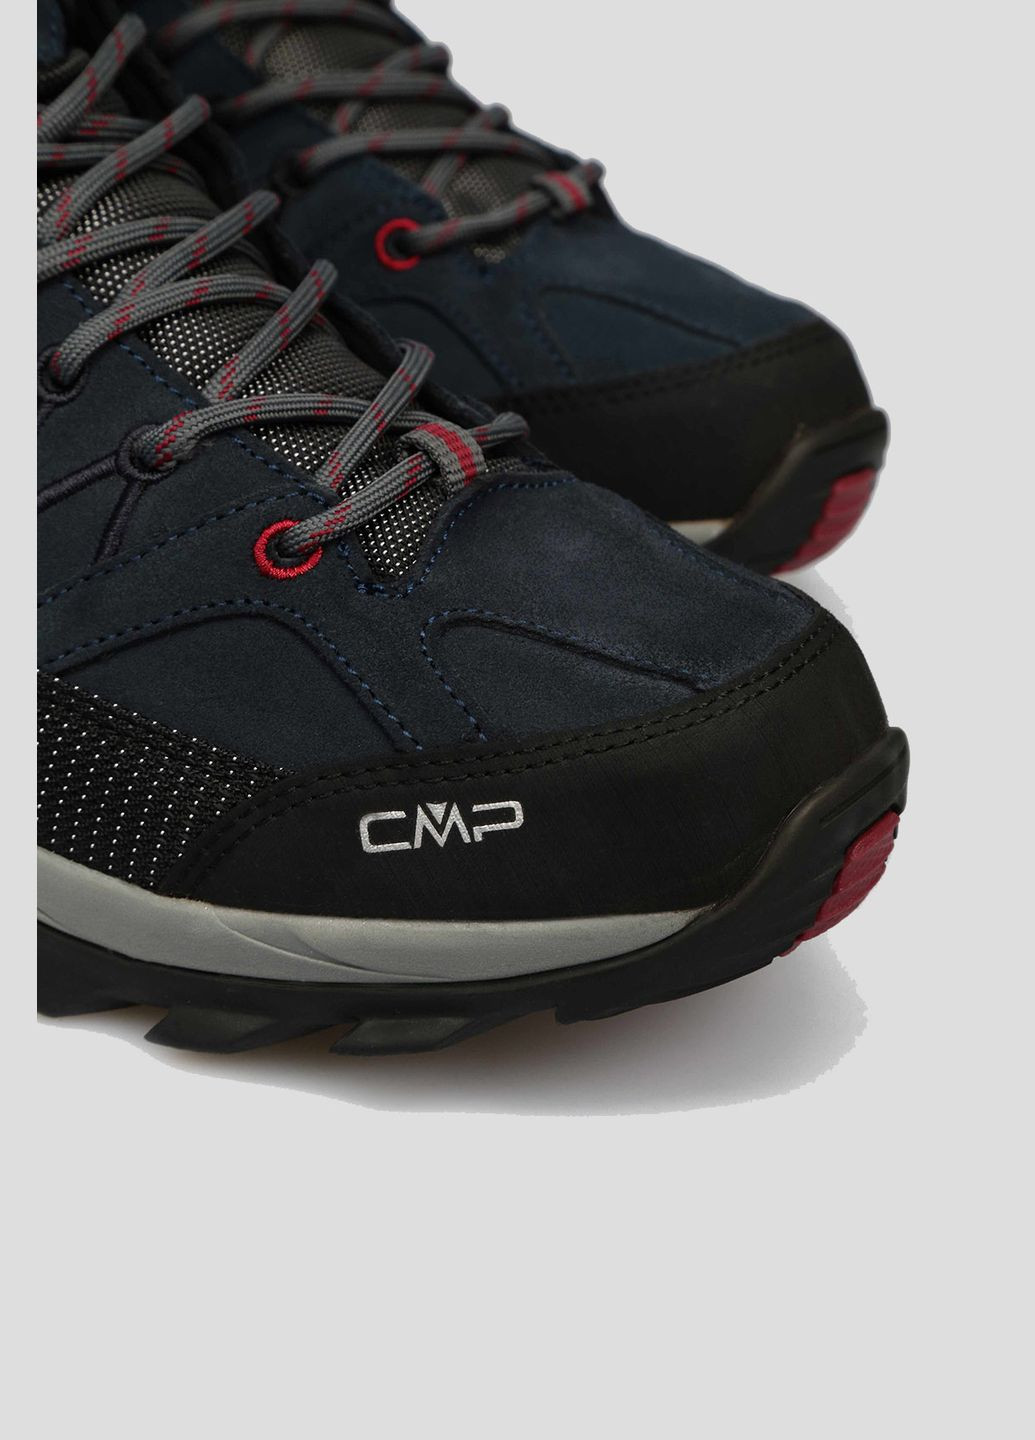 Синие демисезонные темно-синие замшевые ботинки rigel mid trekking shoes wp CMP